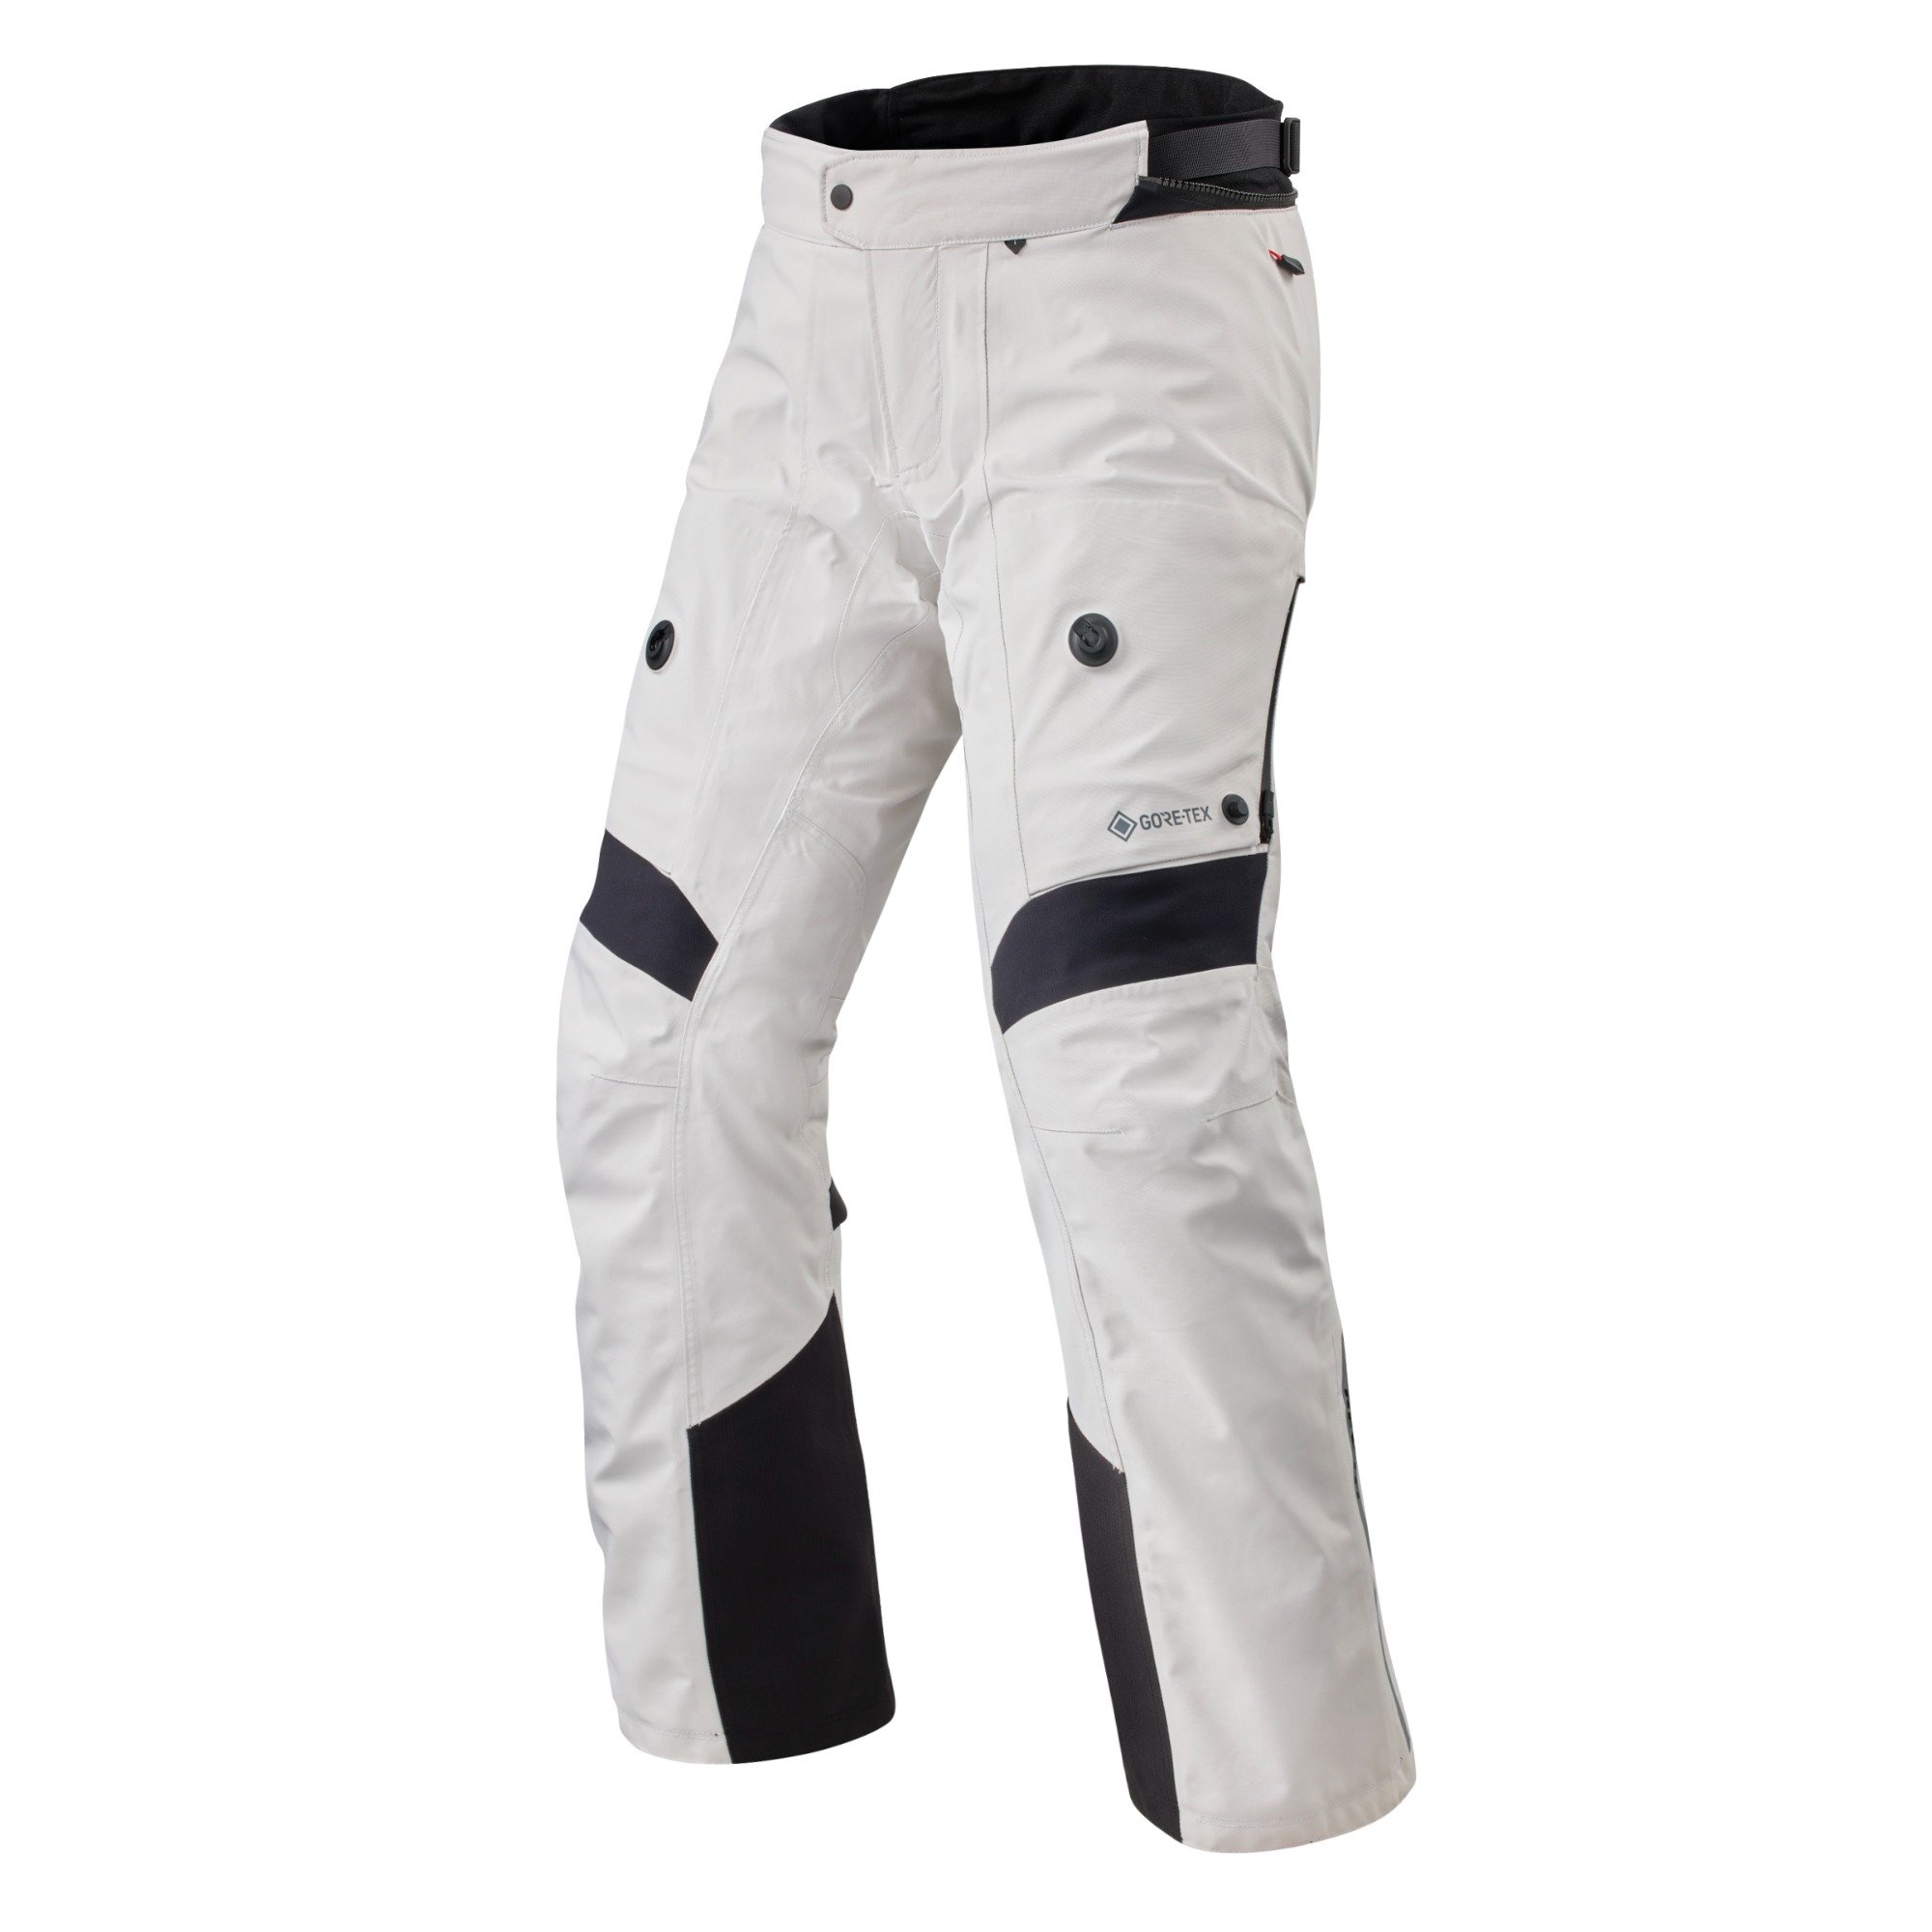 Image of REV'IT! Pants Poseidon 3 GTX Silver Black Standard Motorcycle Pants Size S ID 8700001362580